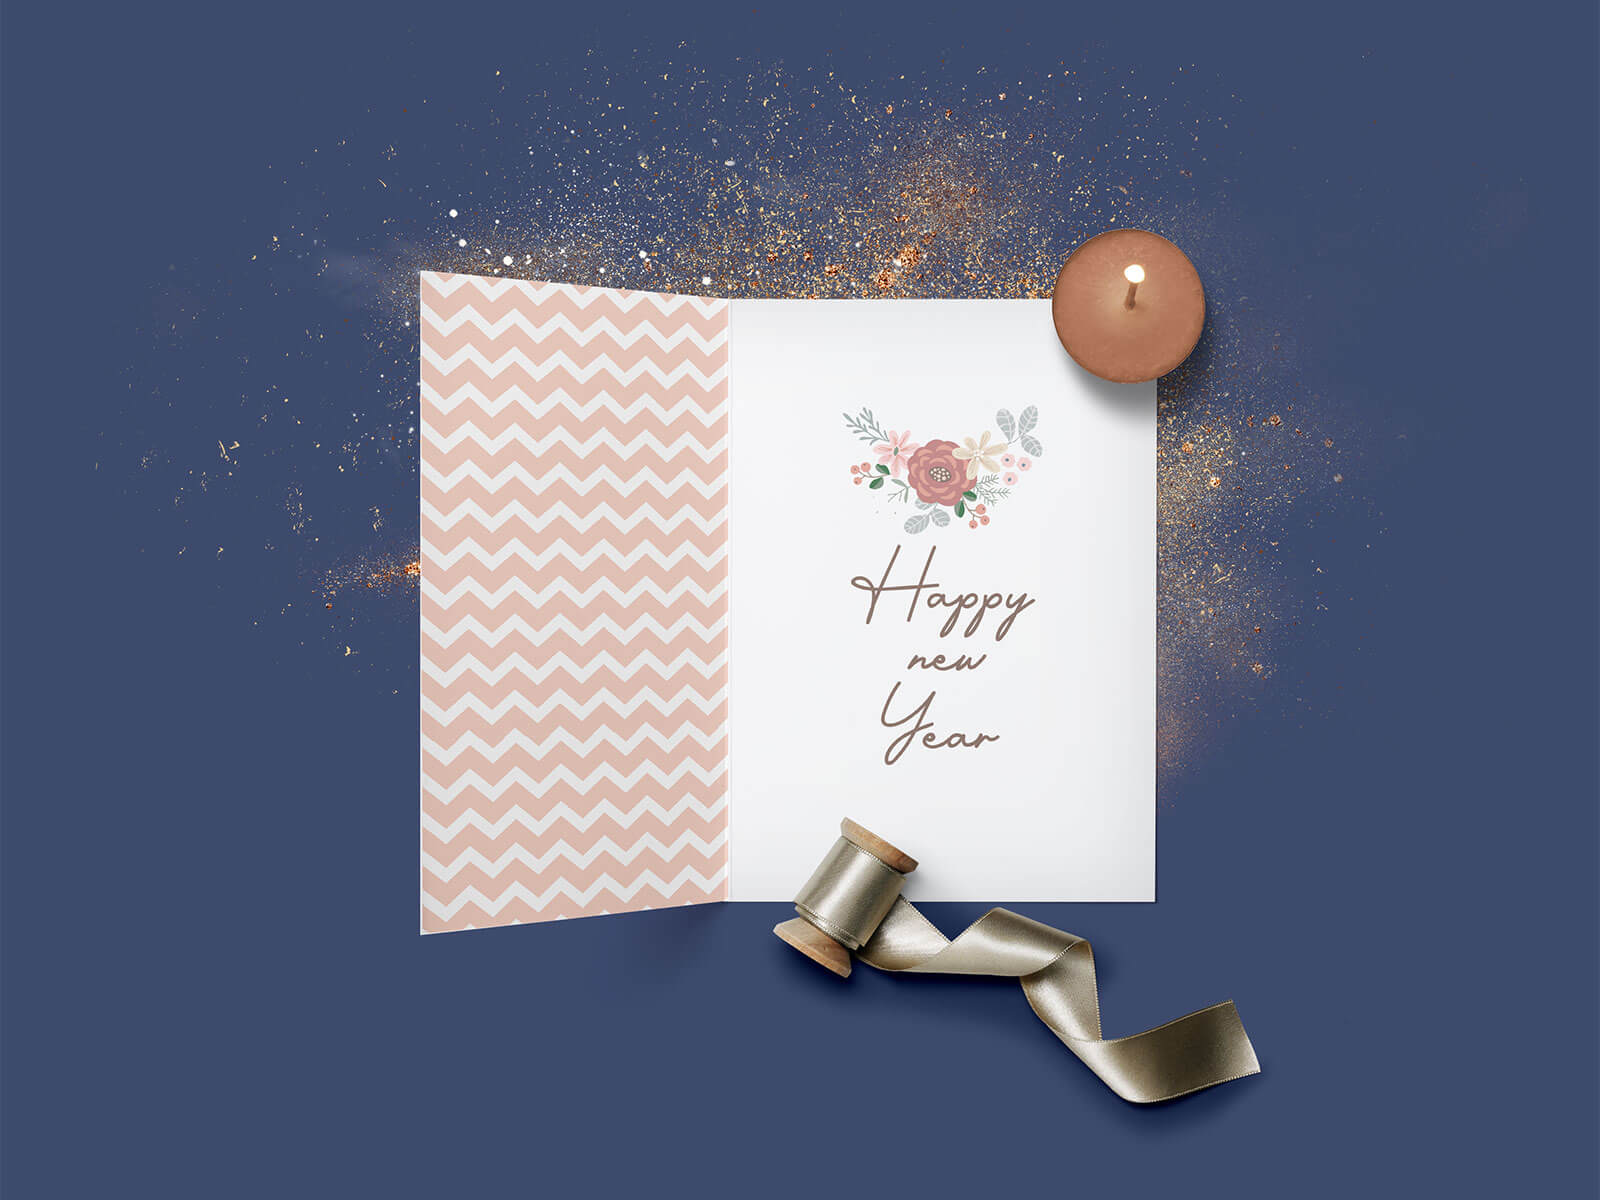 10 Free Greetings Card & Envelope Mockup PSD Set (1)